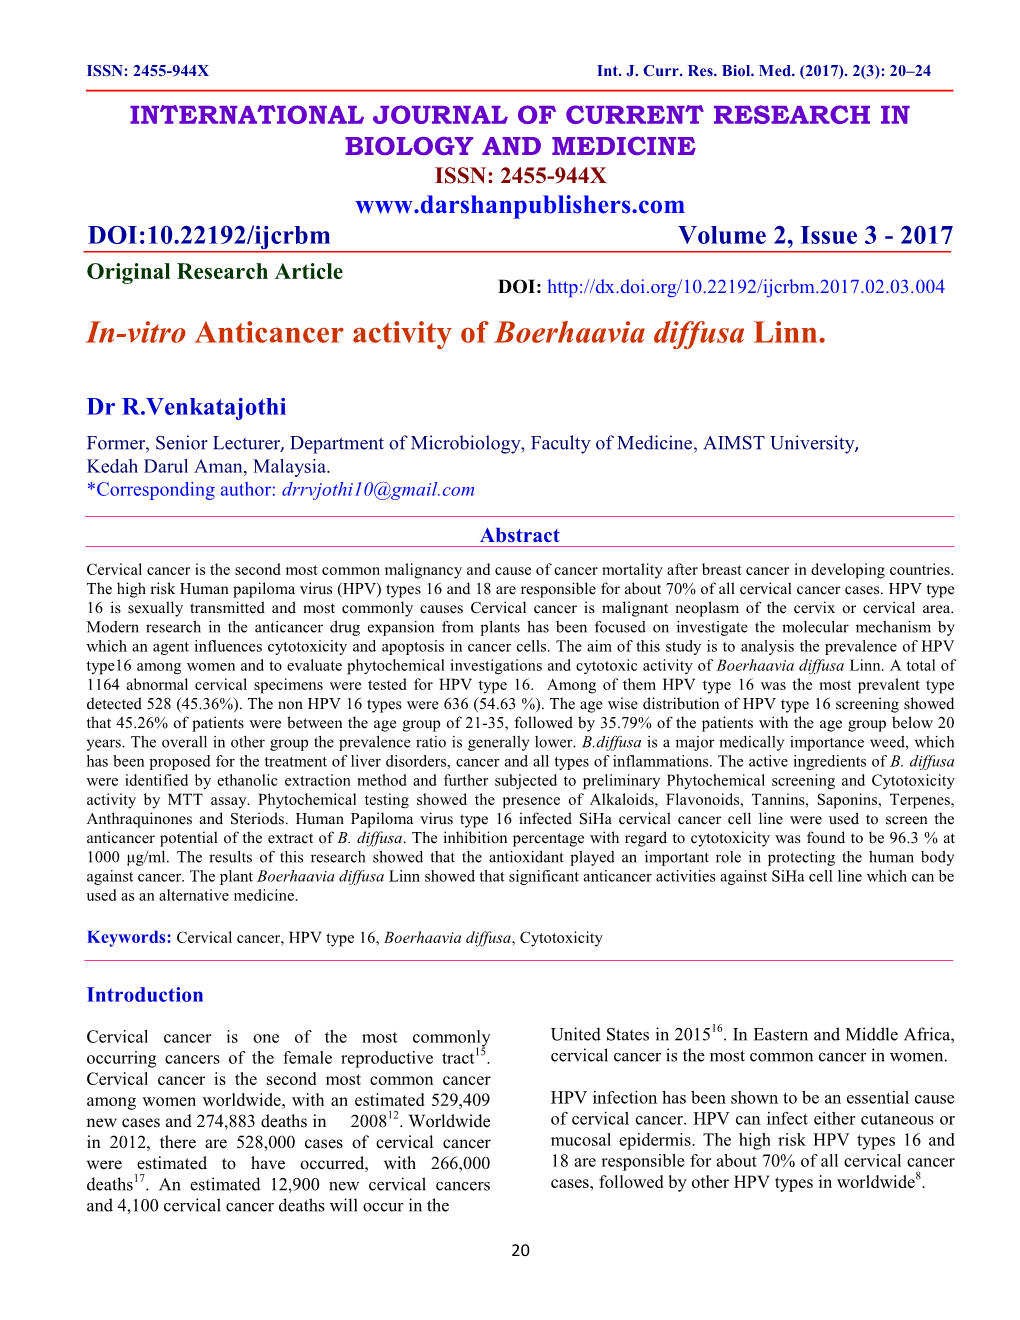 In-Vitro Anticancer Activity of Boerhaavia Diffusa Linn